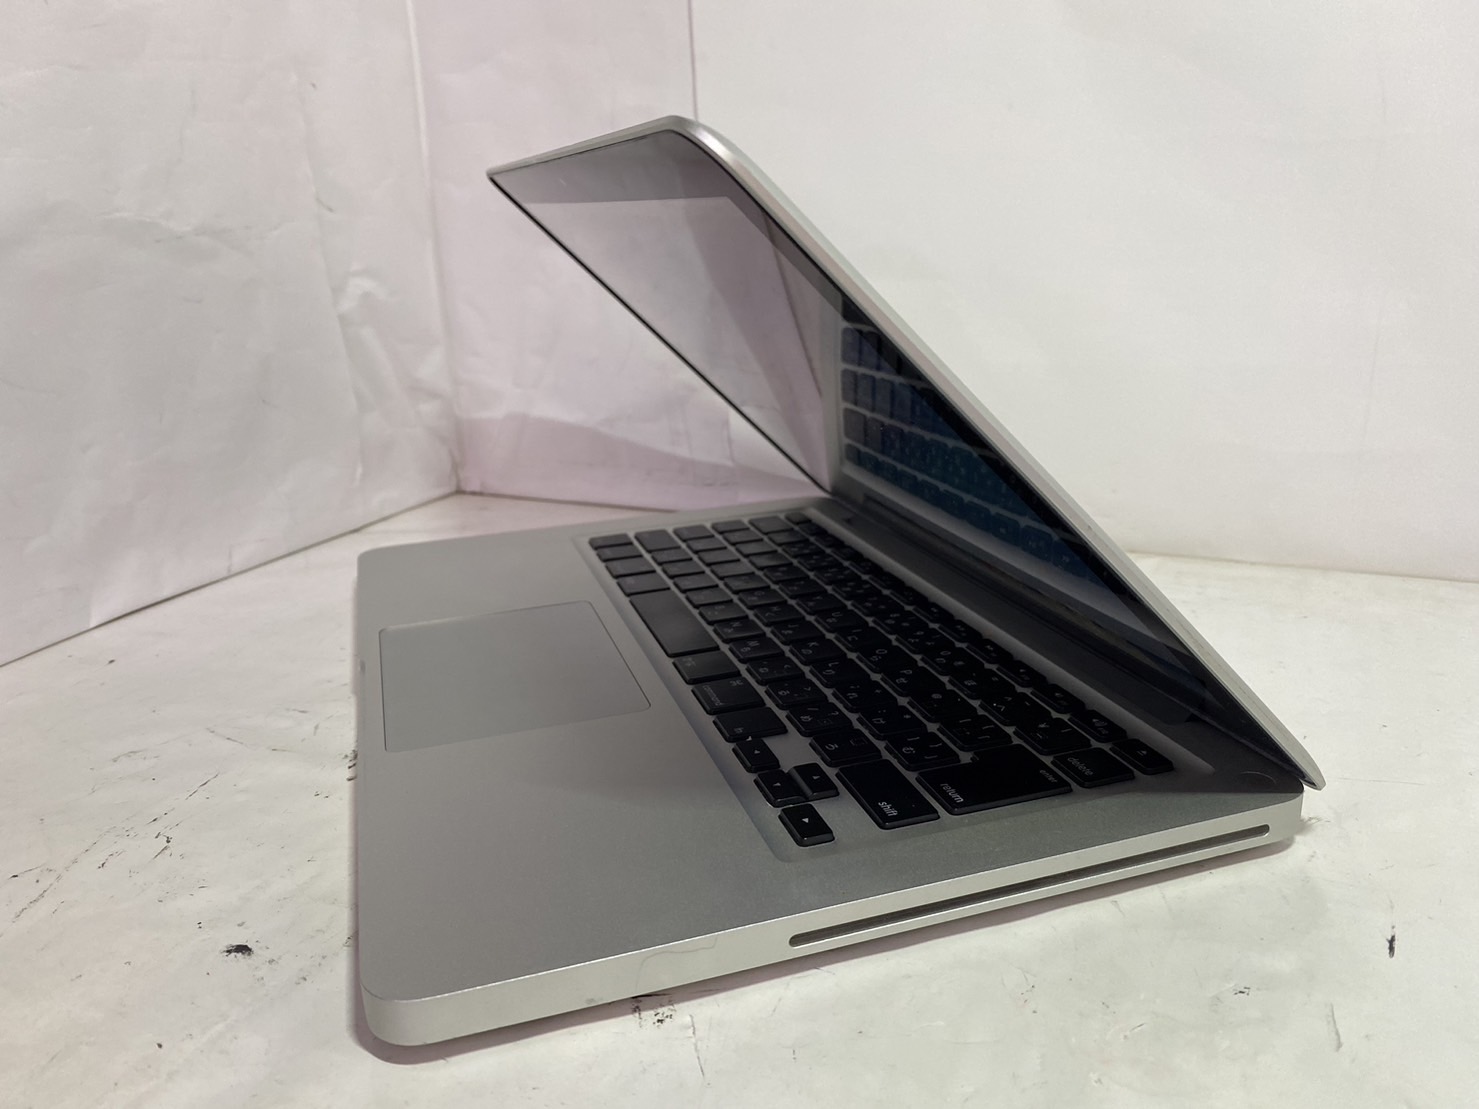 APPLE(アップル) MacBook (13-inch, Aluminum, Late 2008) A1278の激安通販